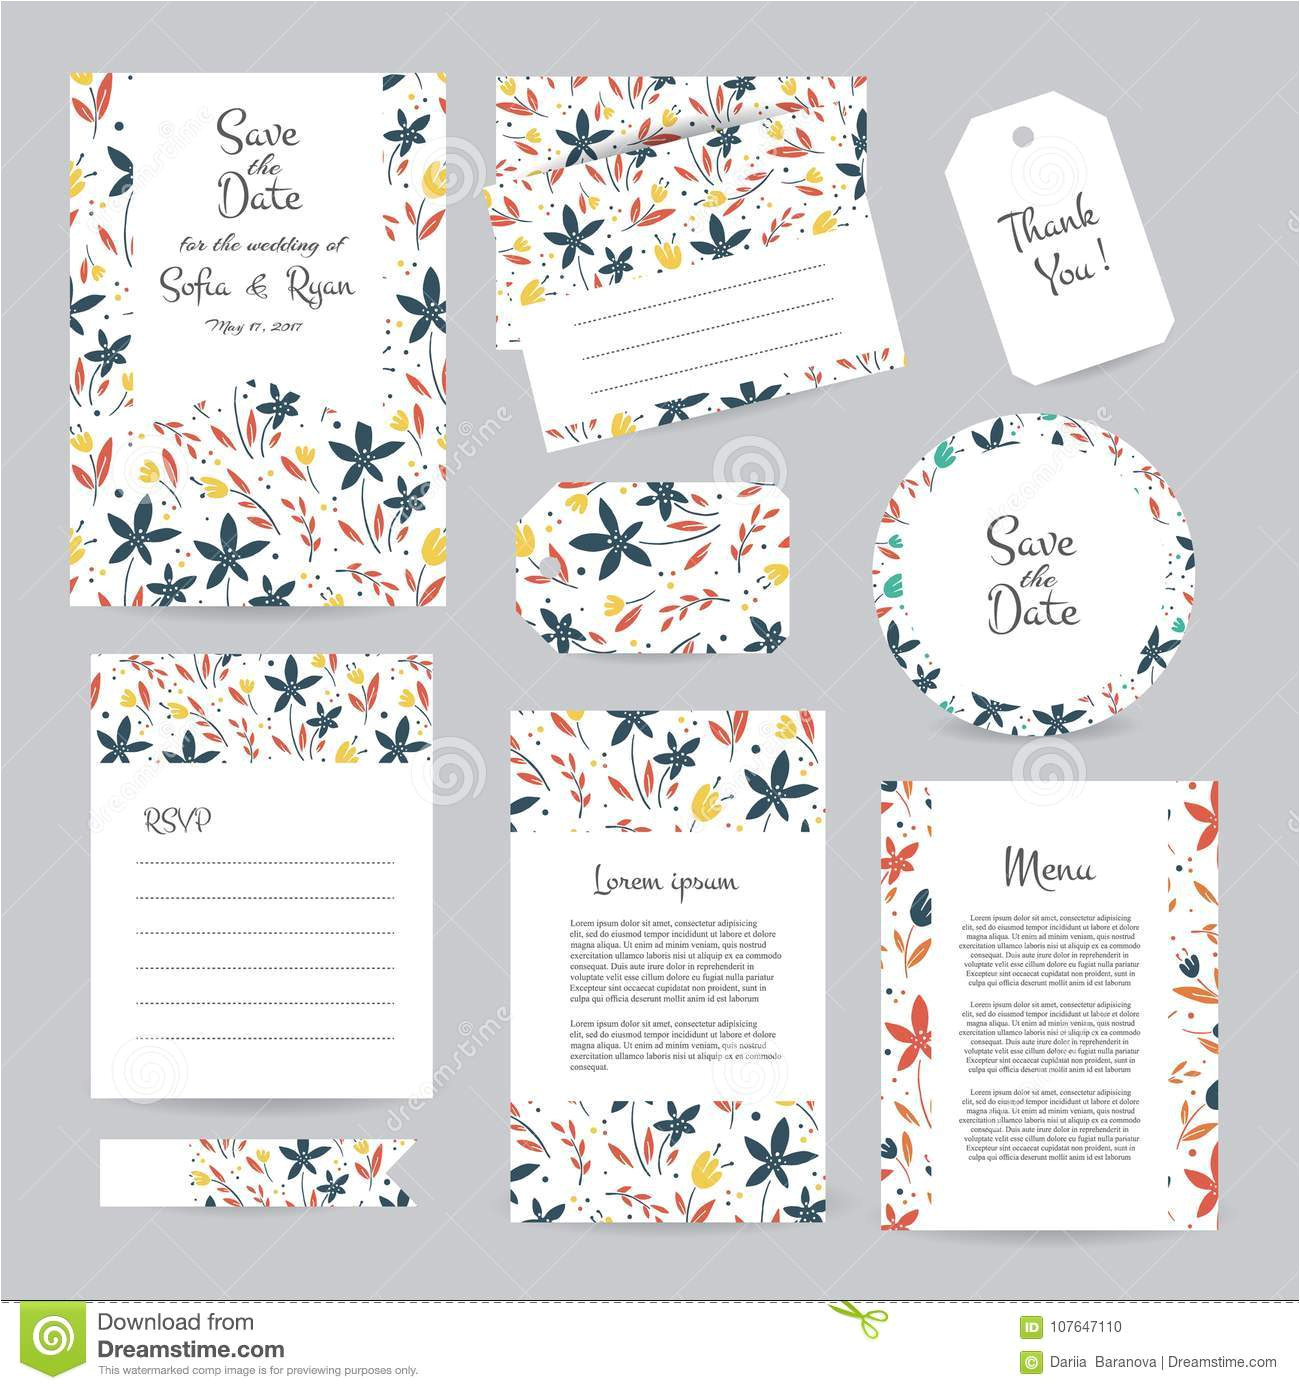 vector gentle wedding cards template flower design invitation save date rsvp menu thank you card bridal set 107647110 jpg